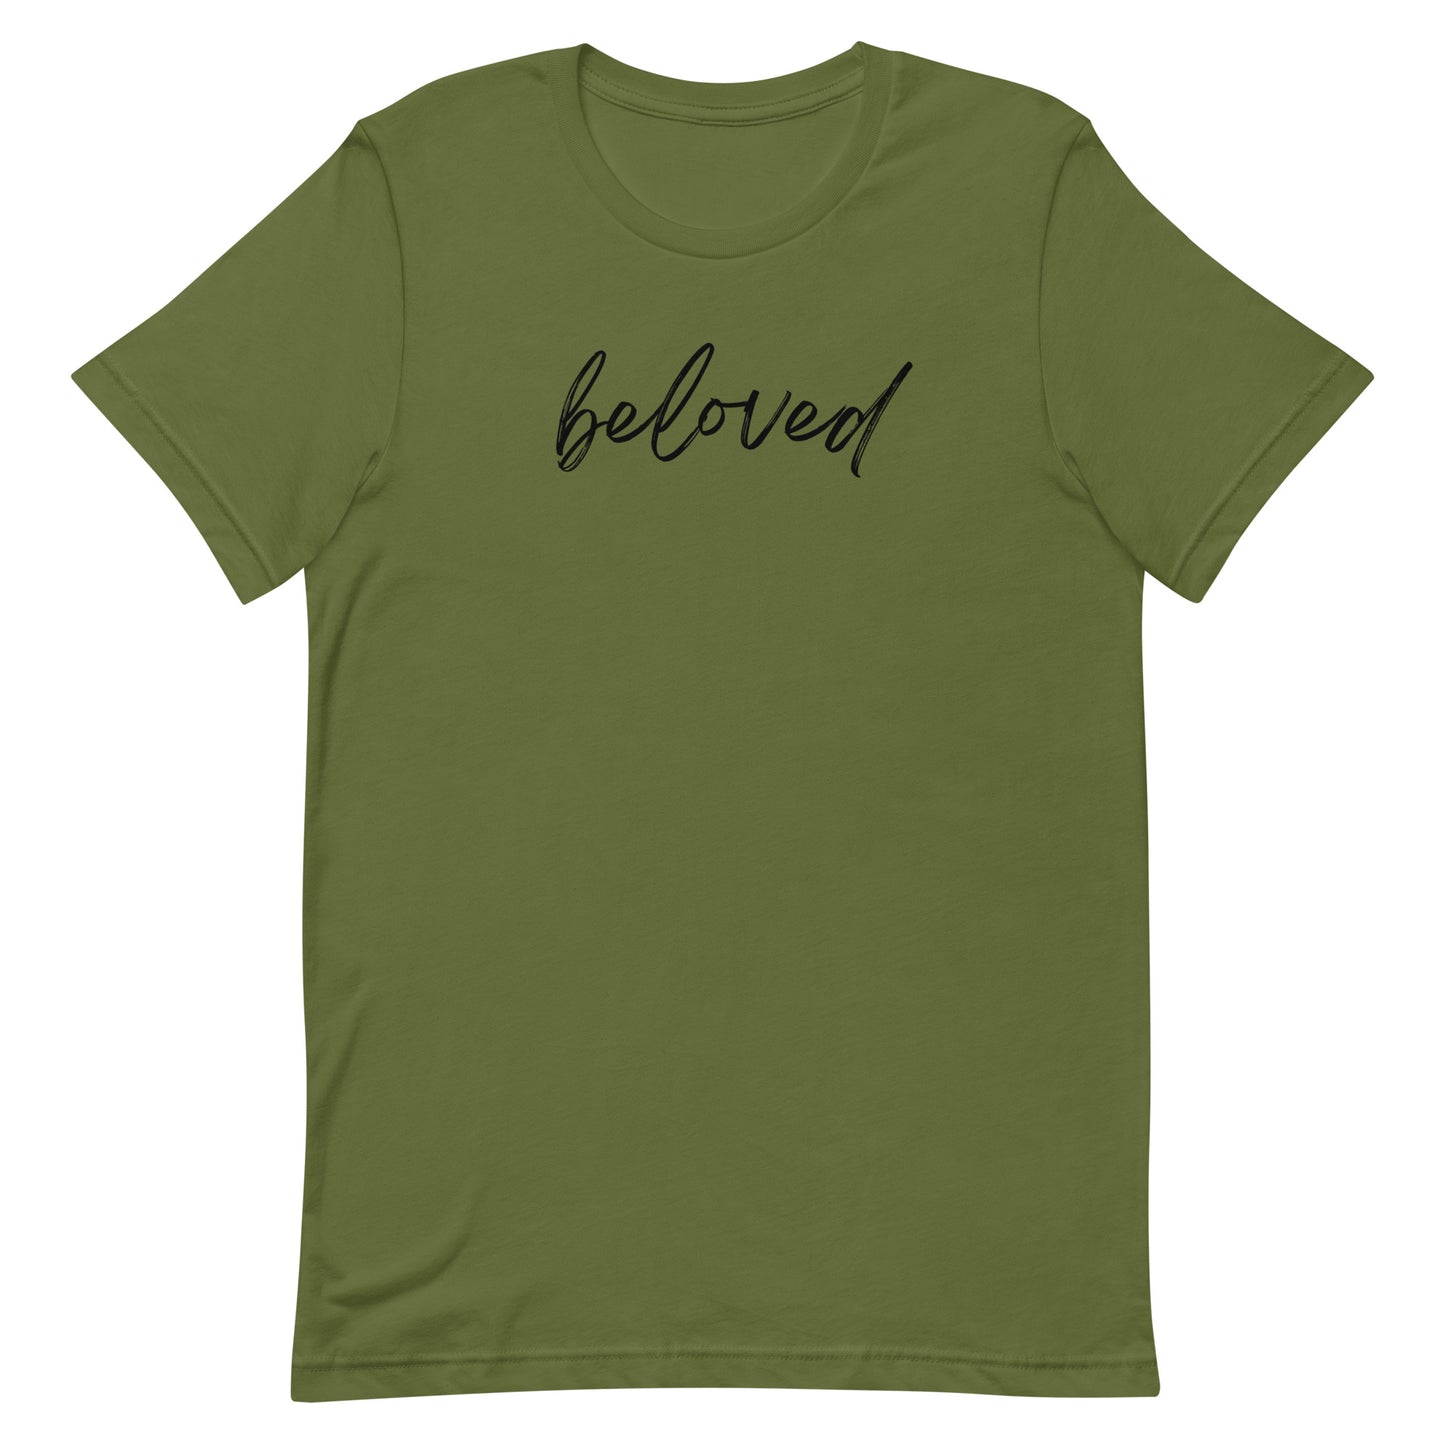 "Beloved"  t-shirt